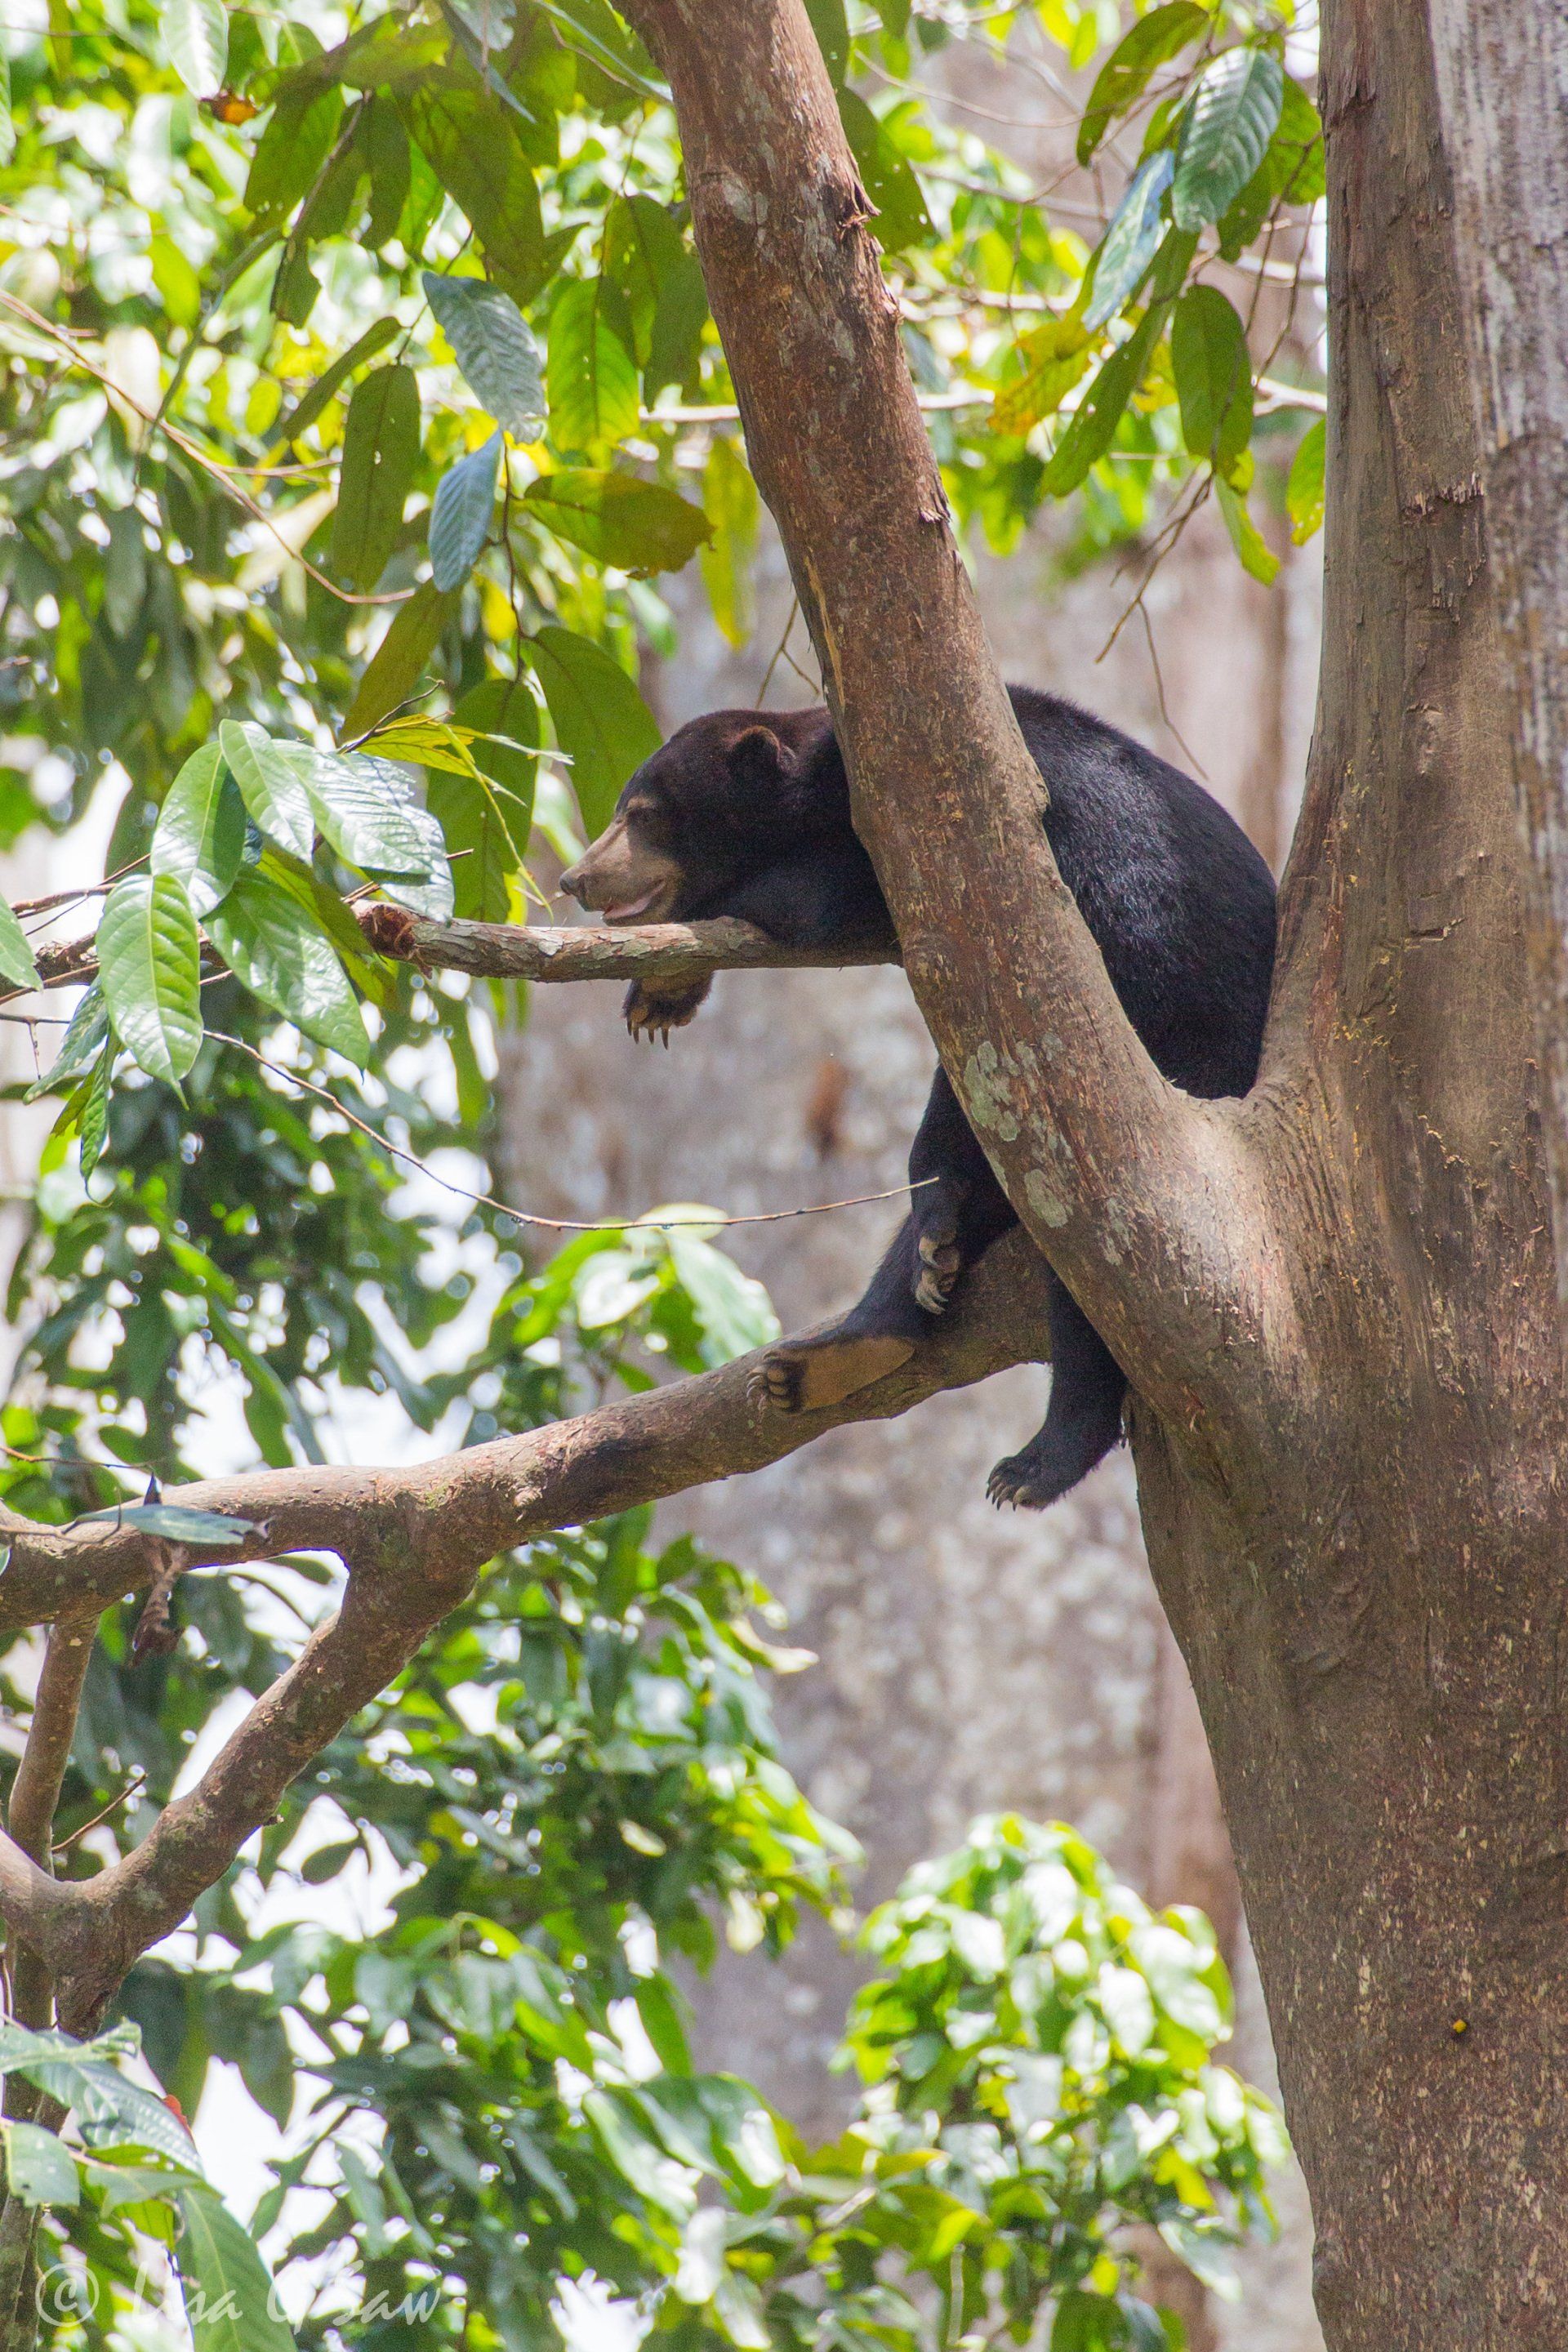 Sun Bear sprawled over a branch up a tree, Sepilok